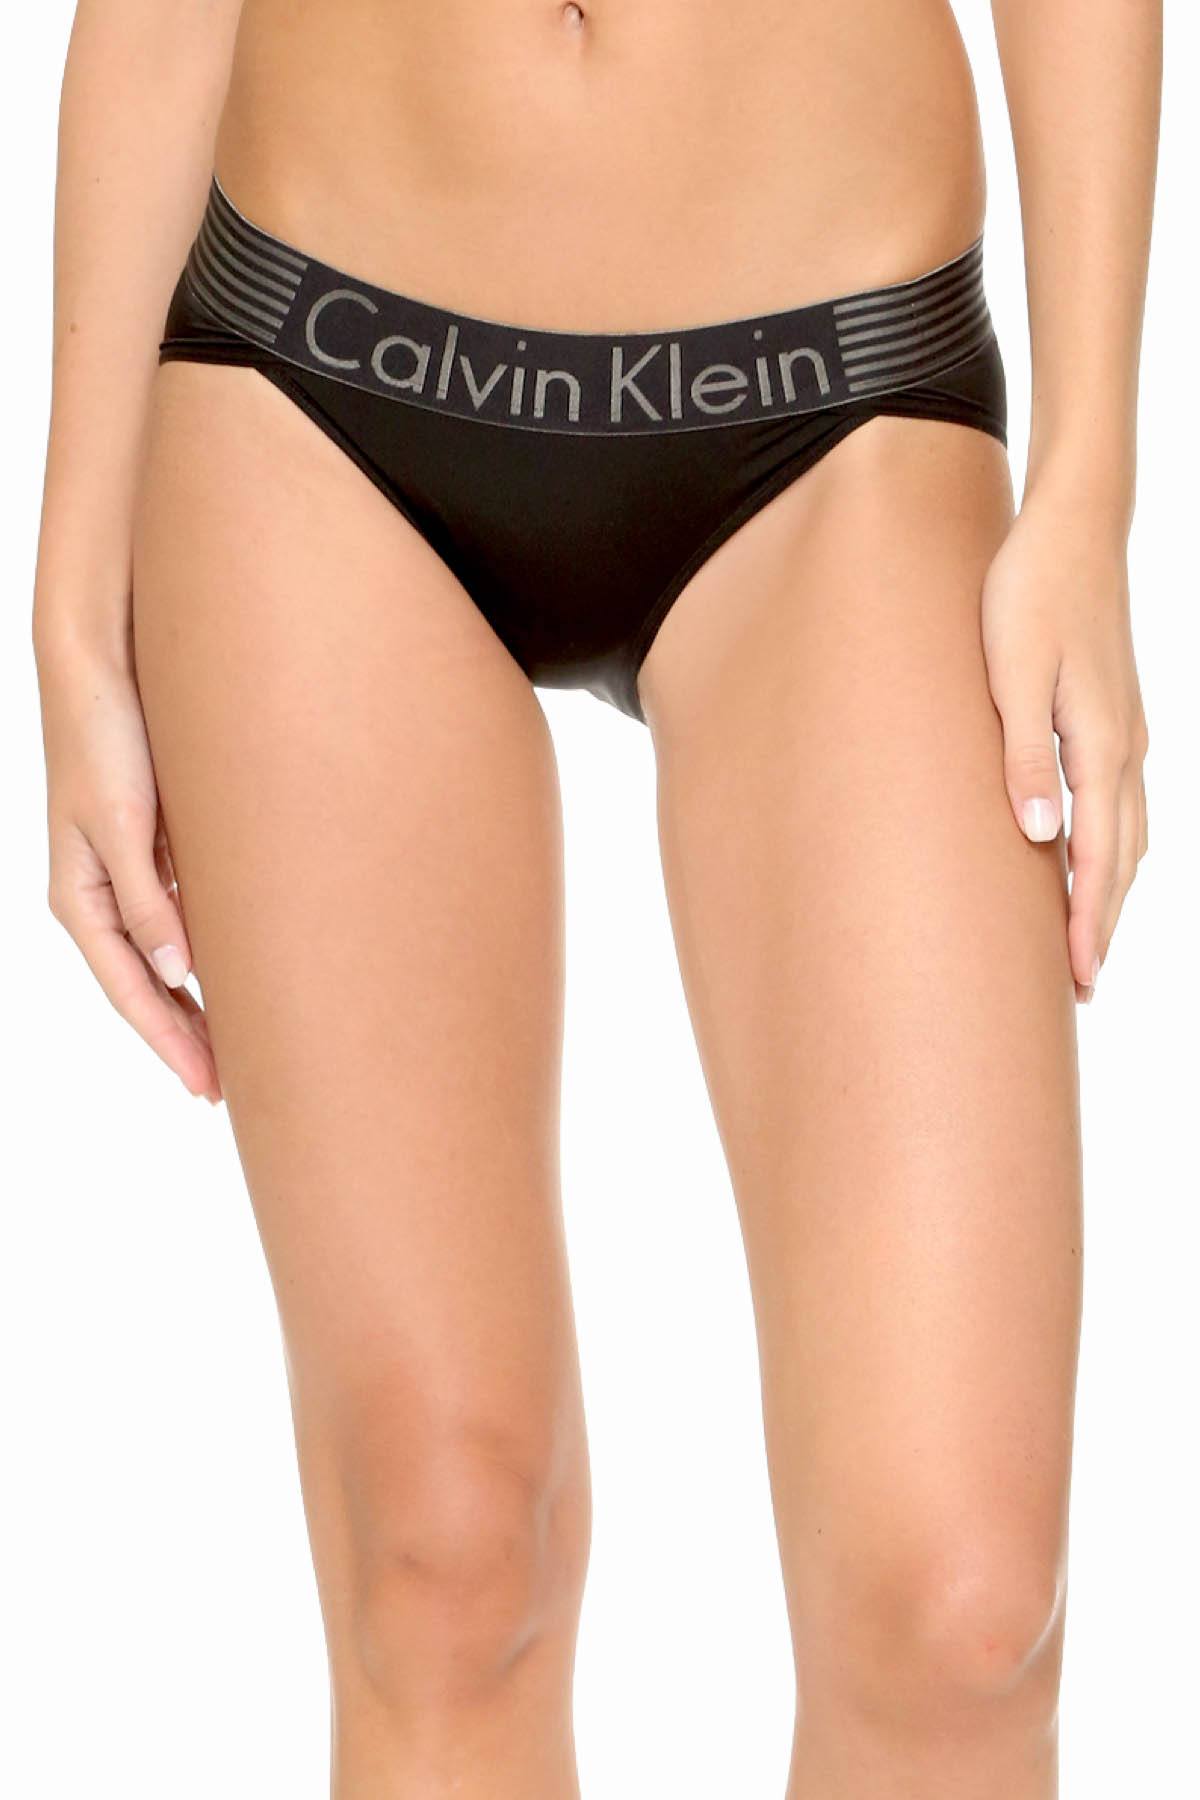 Calvin Klein Black Iron-Strength Bikini Brief